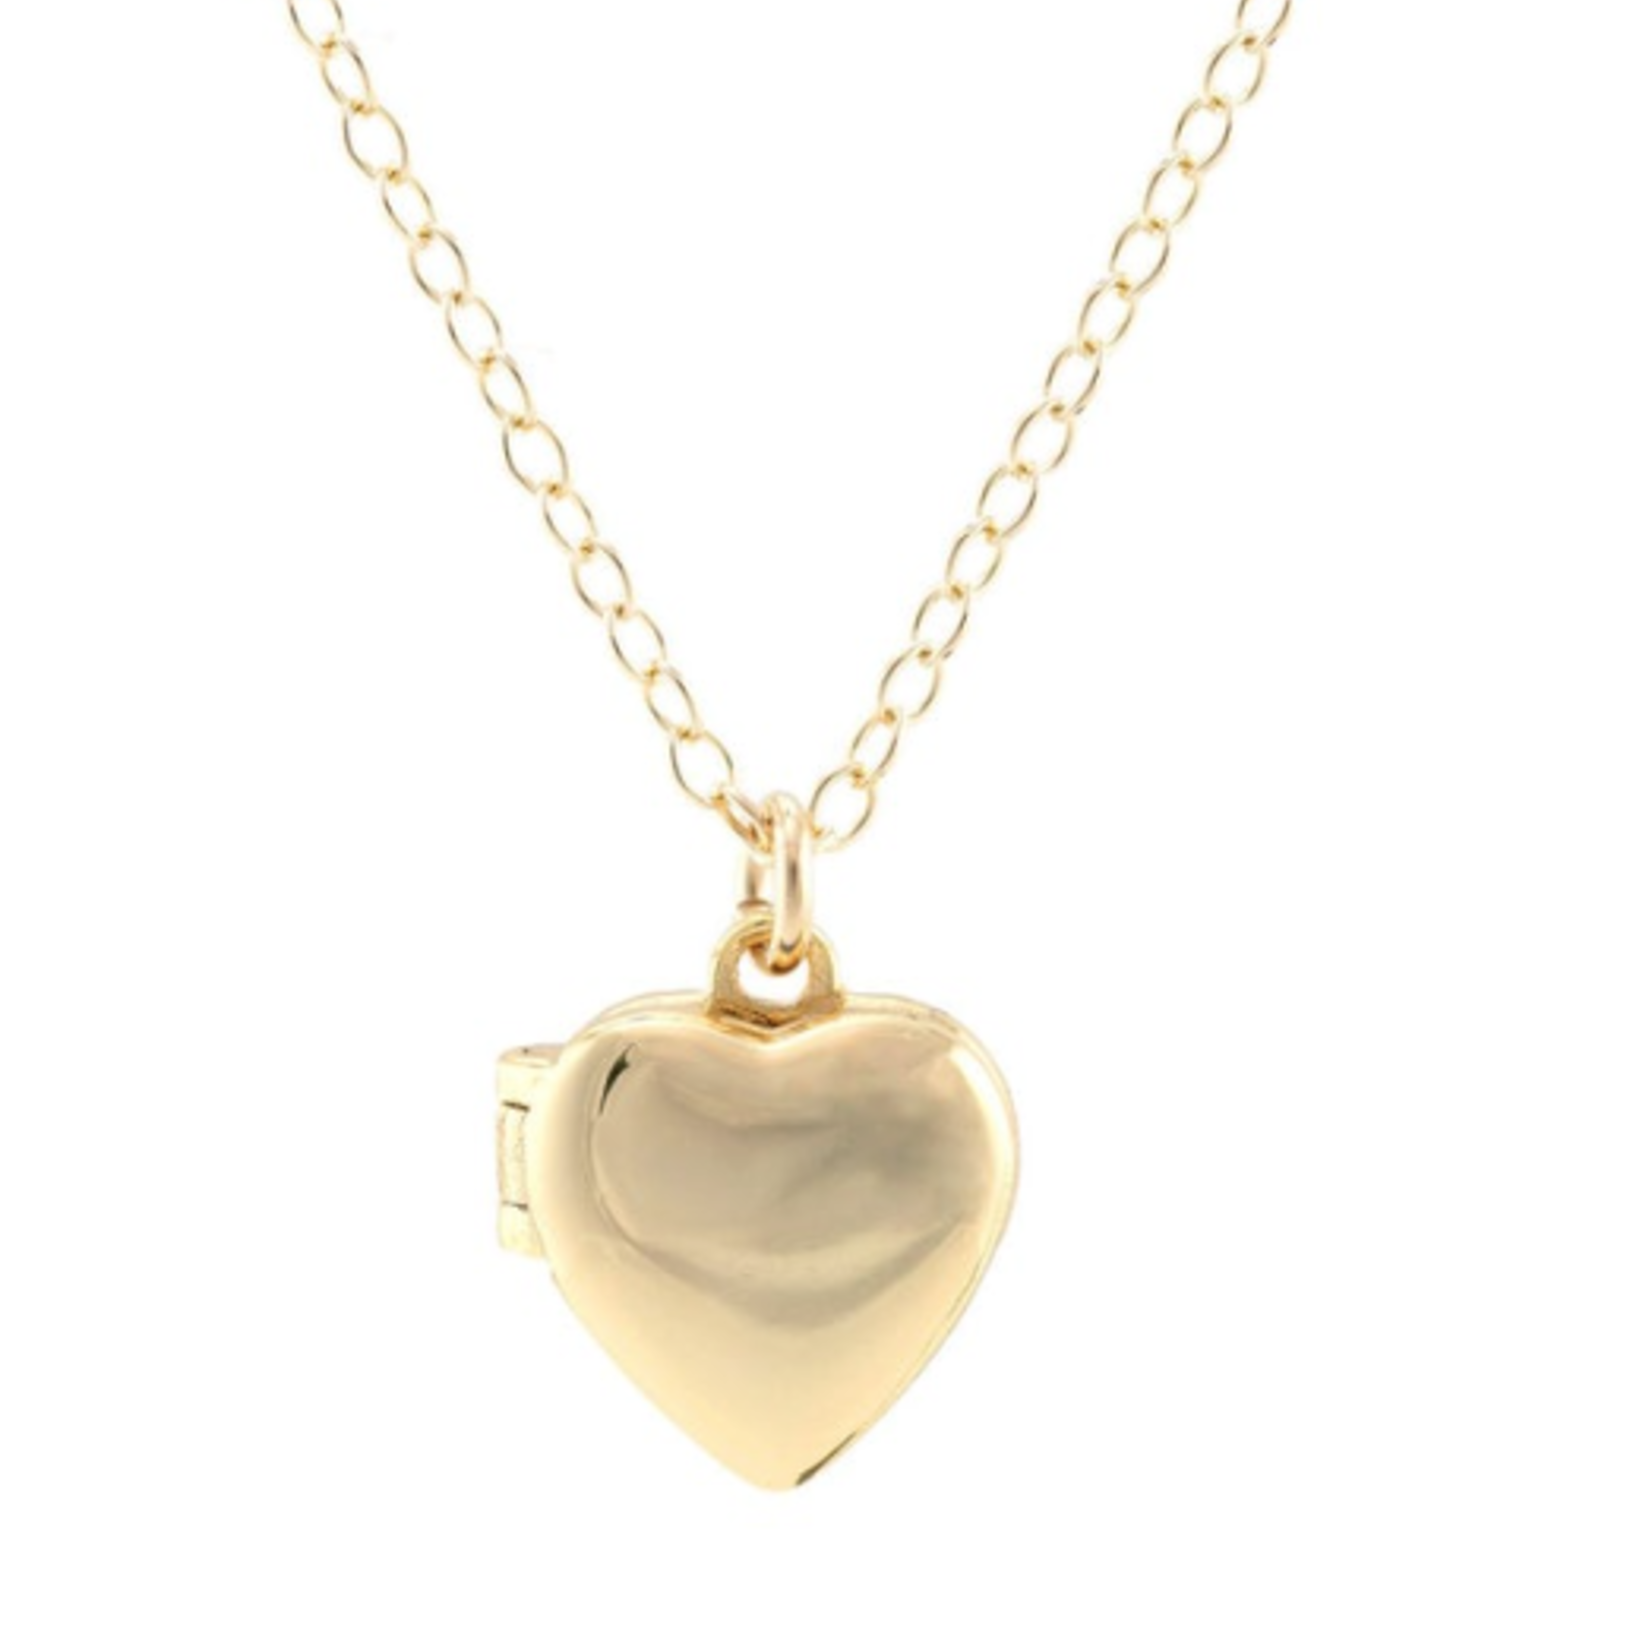 KRIS NATIONS Heart Locket Necklace- 18k Gold Vermeil